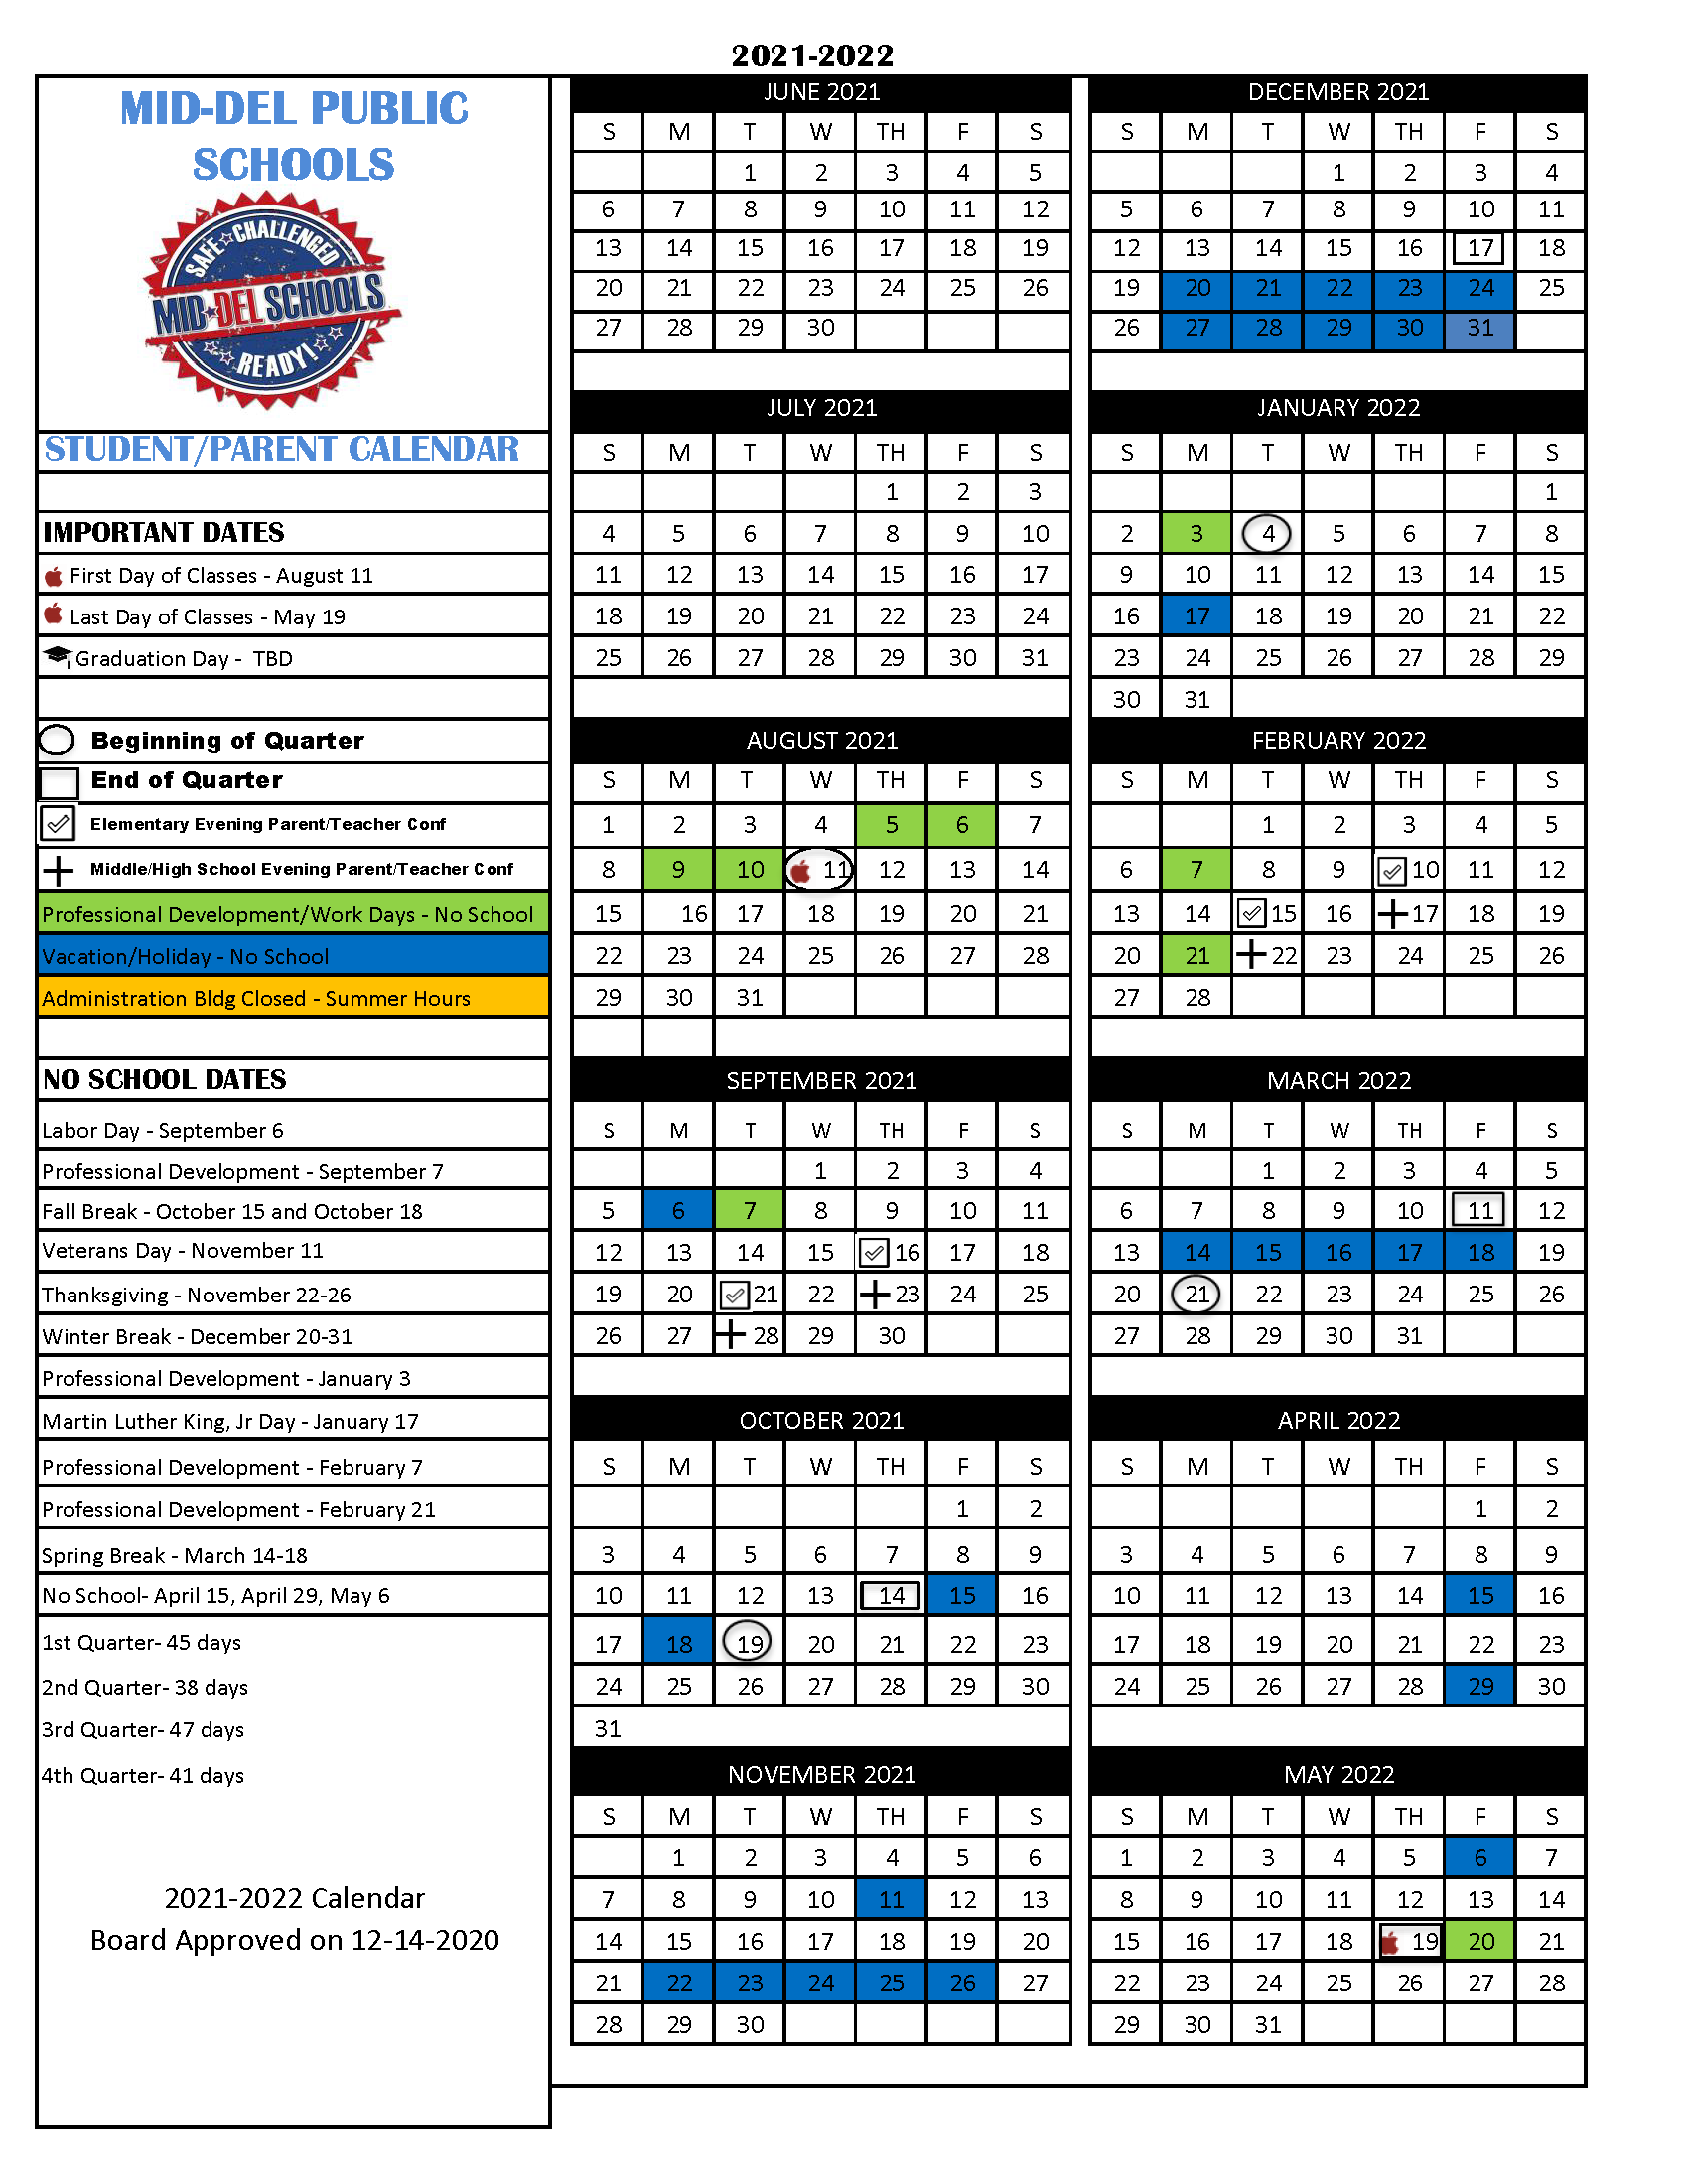 Okstate Calendar Spring 2022 2021-2022 School Calendar | Mid-Del School District